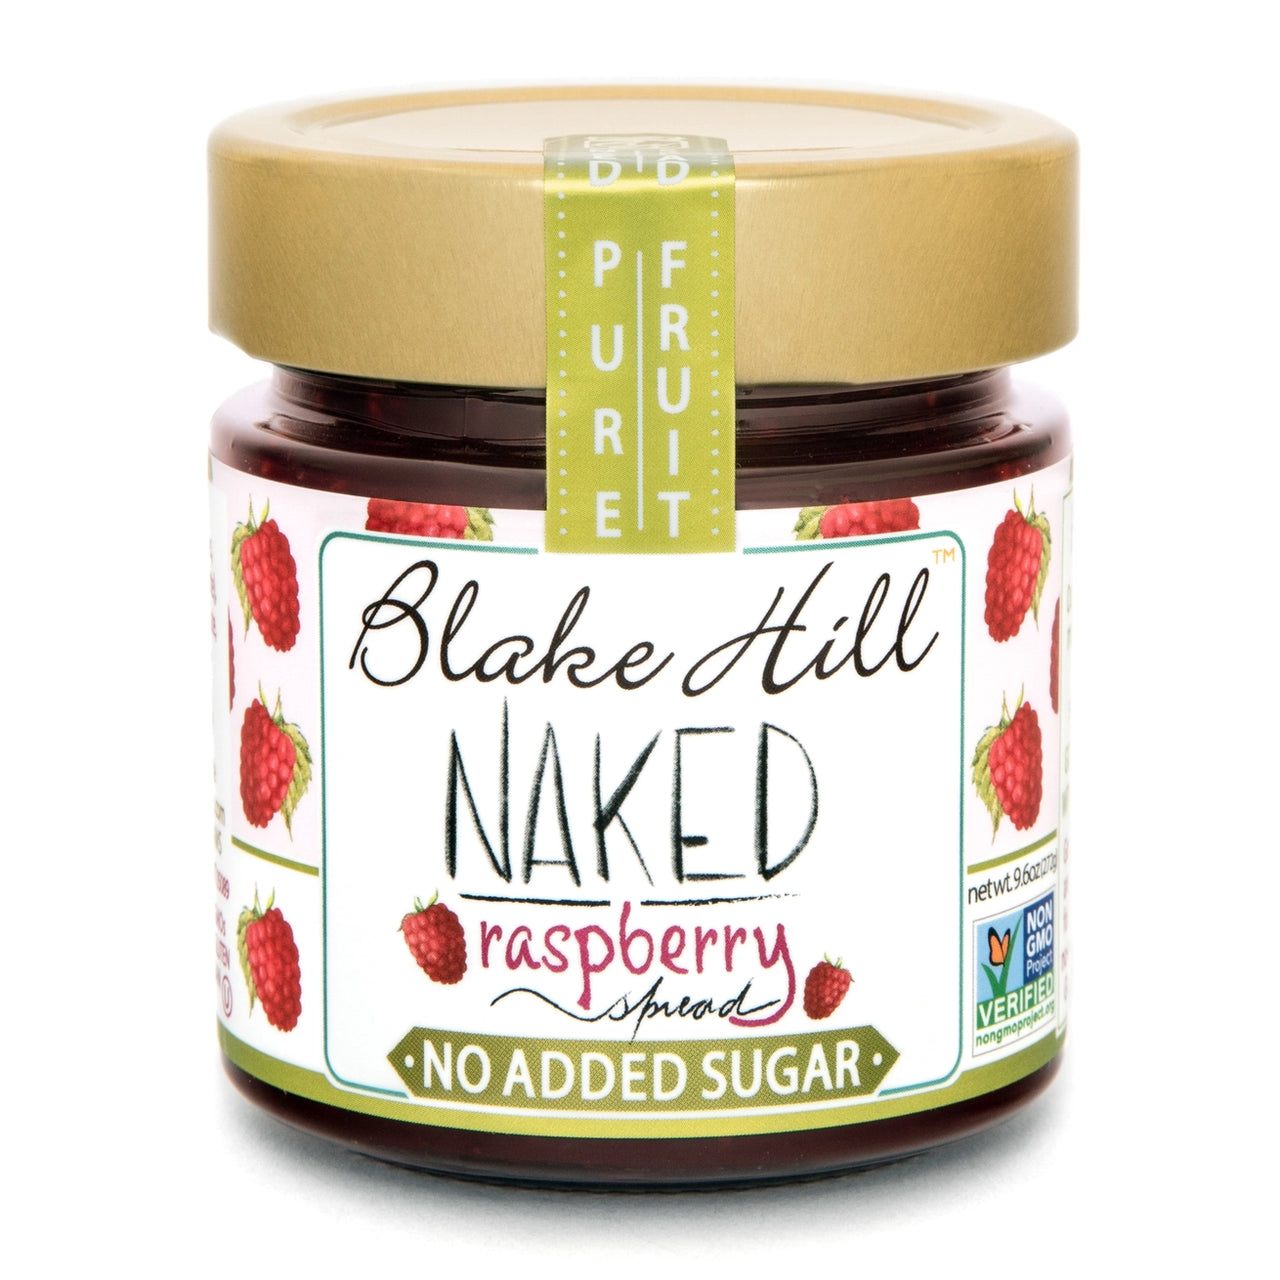 Naked Raspberry Spread - No Sugar Added